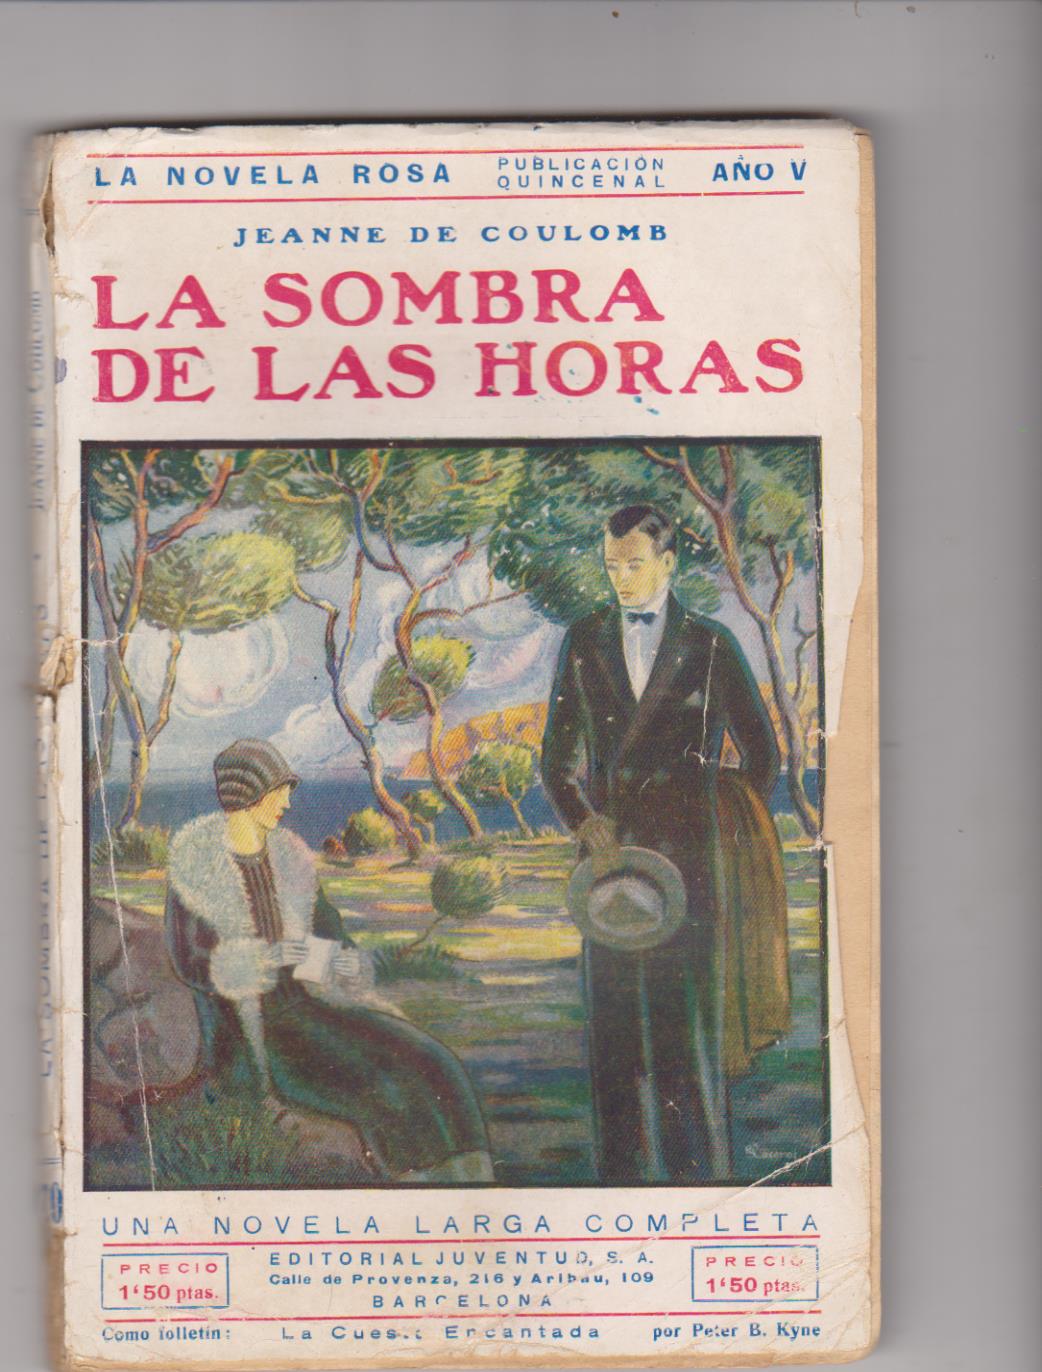 La Novela Rosa nº 120. Jeanne de coulomb. La sombra de las horas. Editorial Juventud 1928